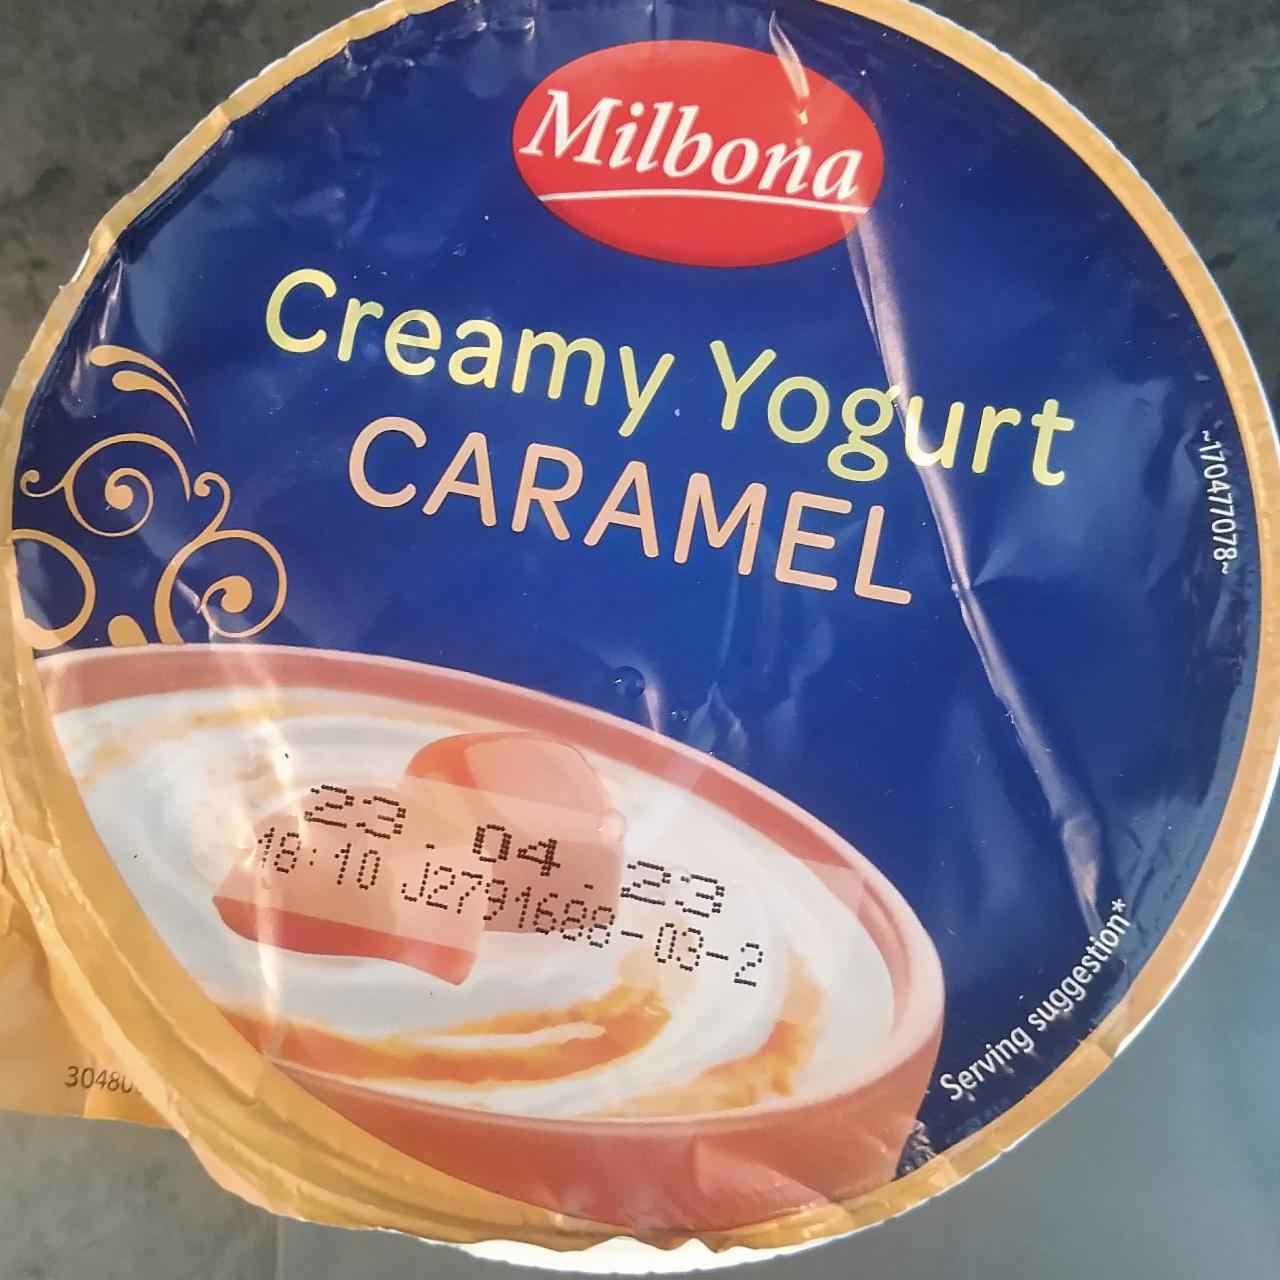 Fotografie - Creamy Yogurt Caramel Milbona